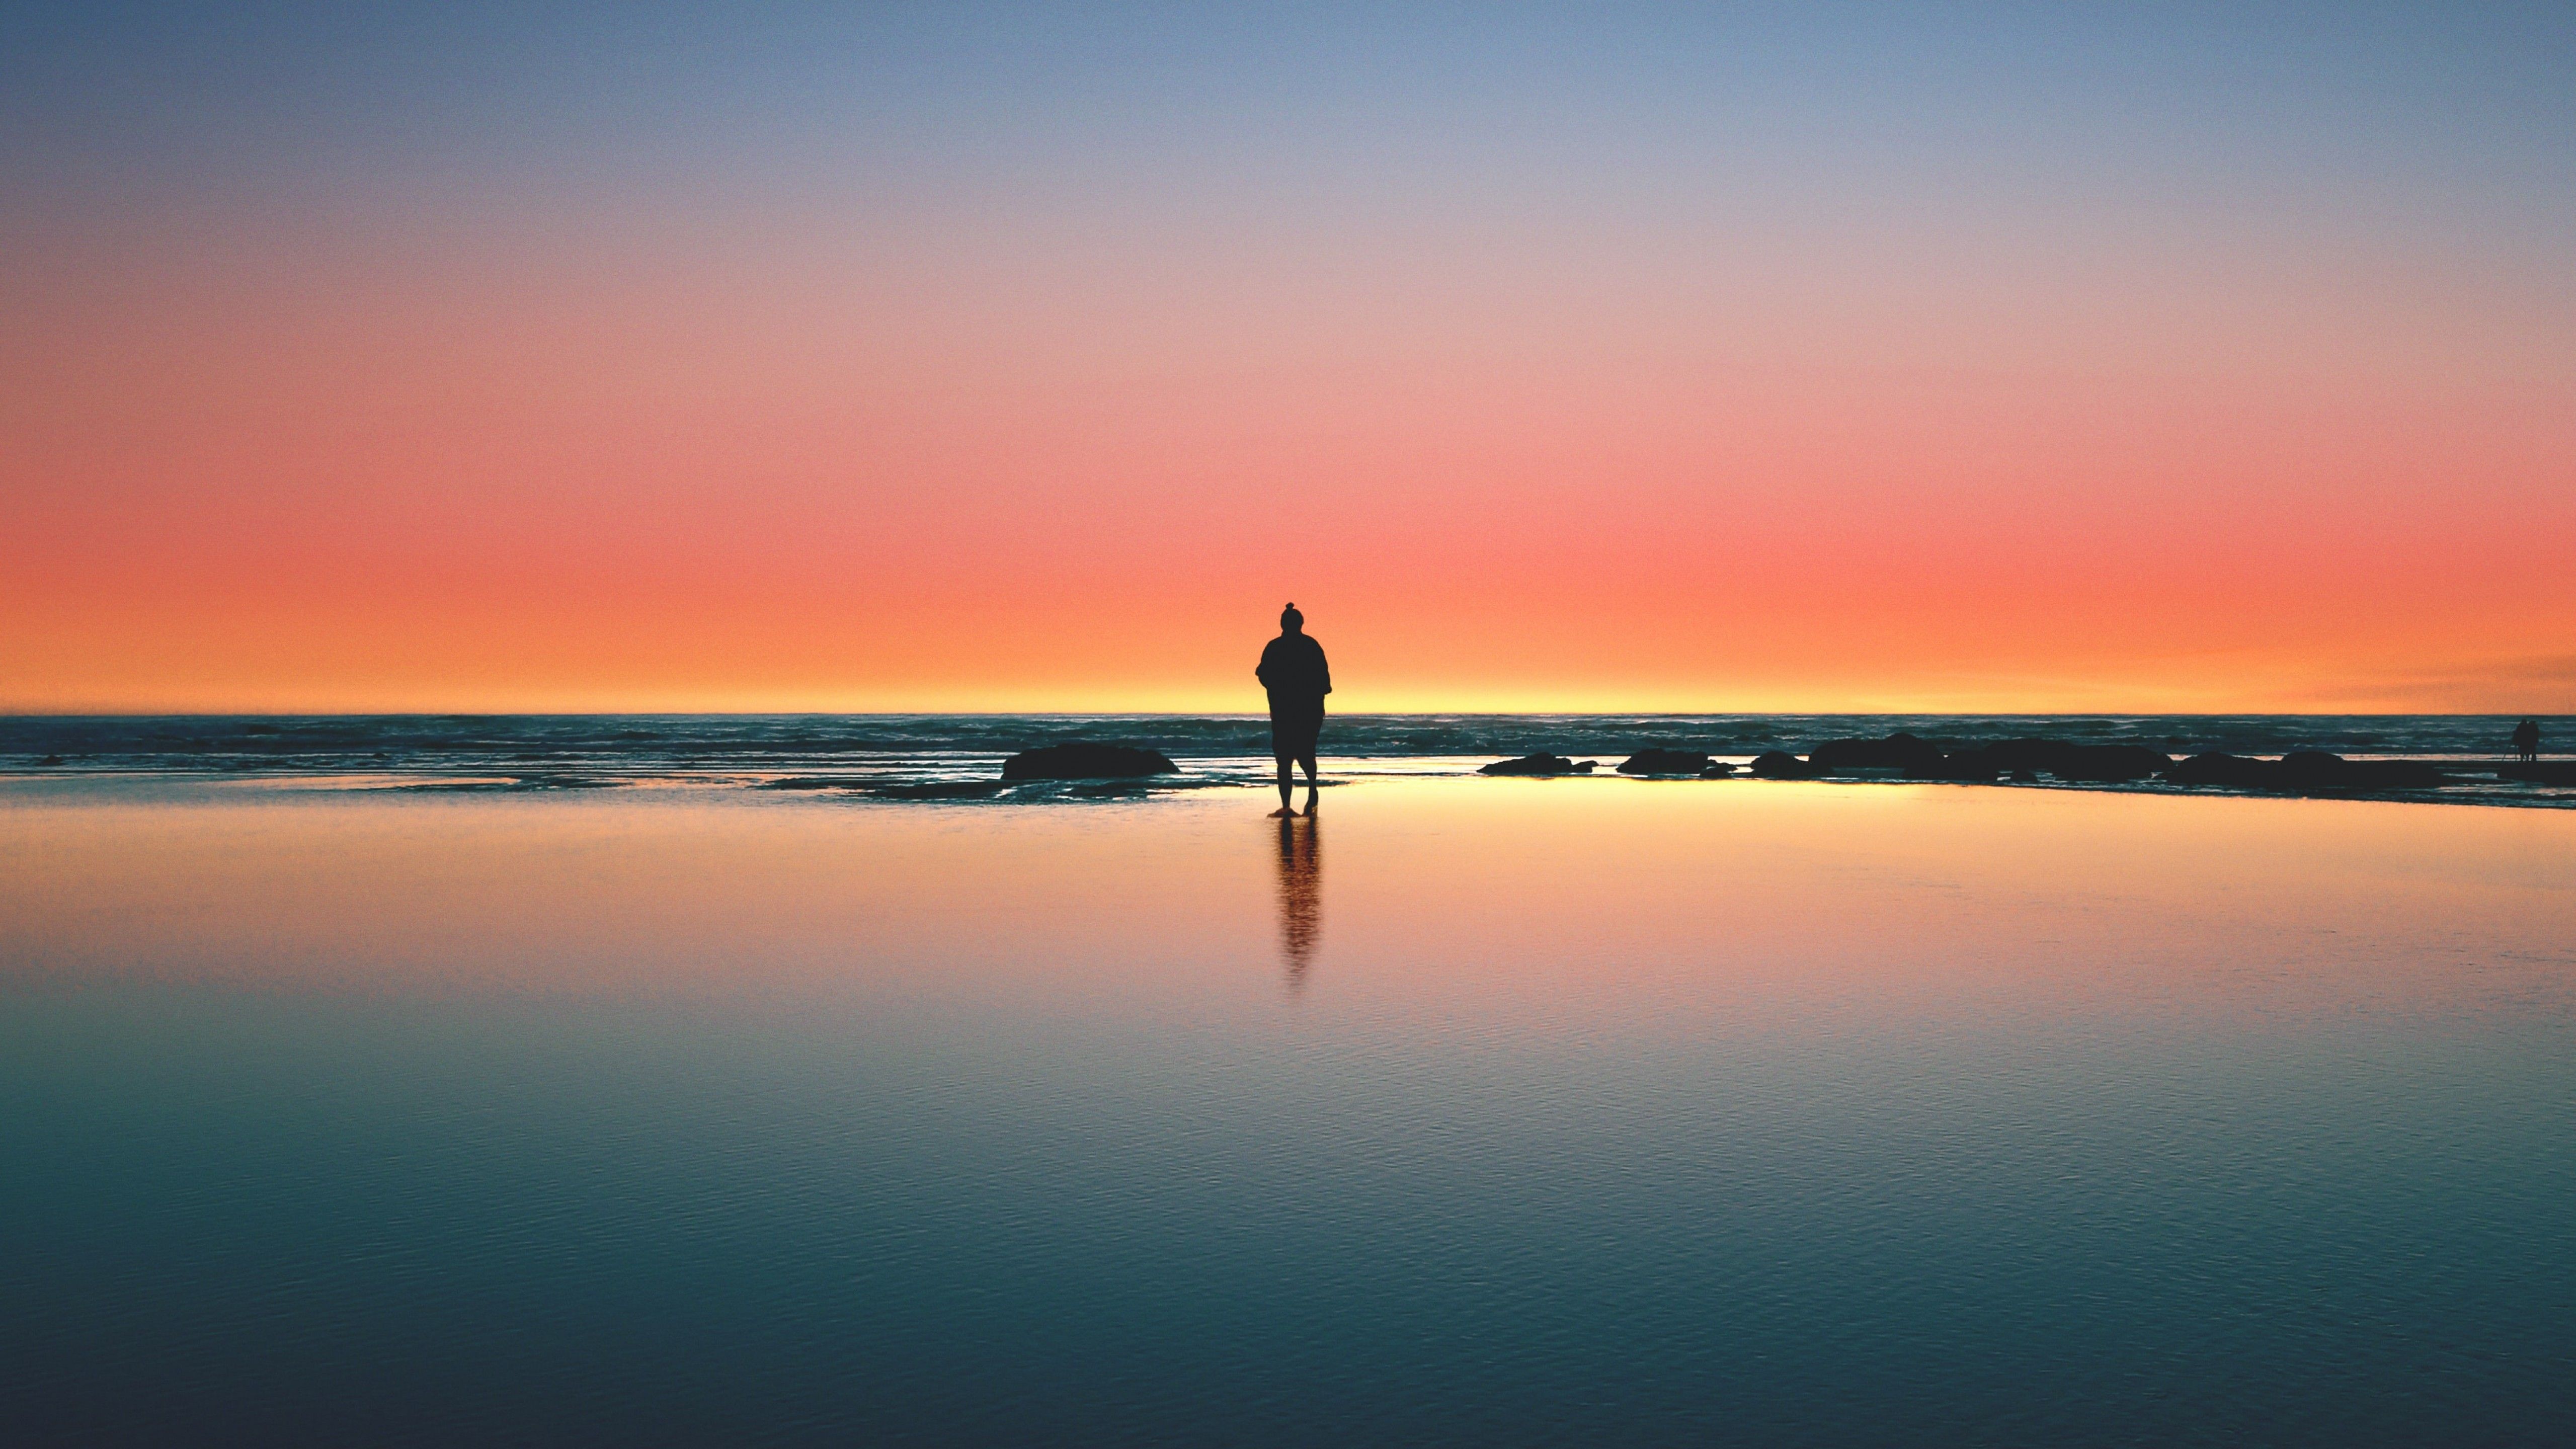 Horizon 4K Wallpaper, Beach, Man, Alone, Sunset, Silhouette, Crescent Moon, Reflection, Nature